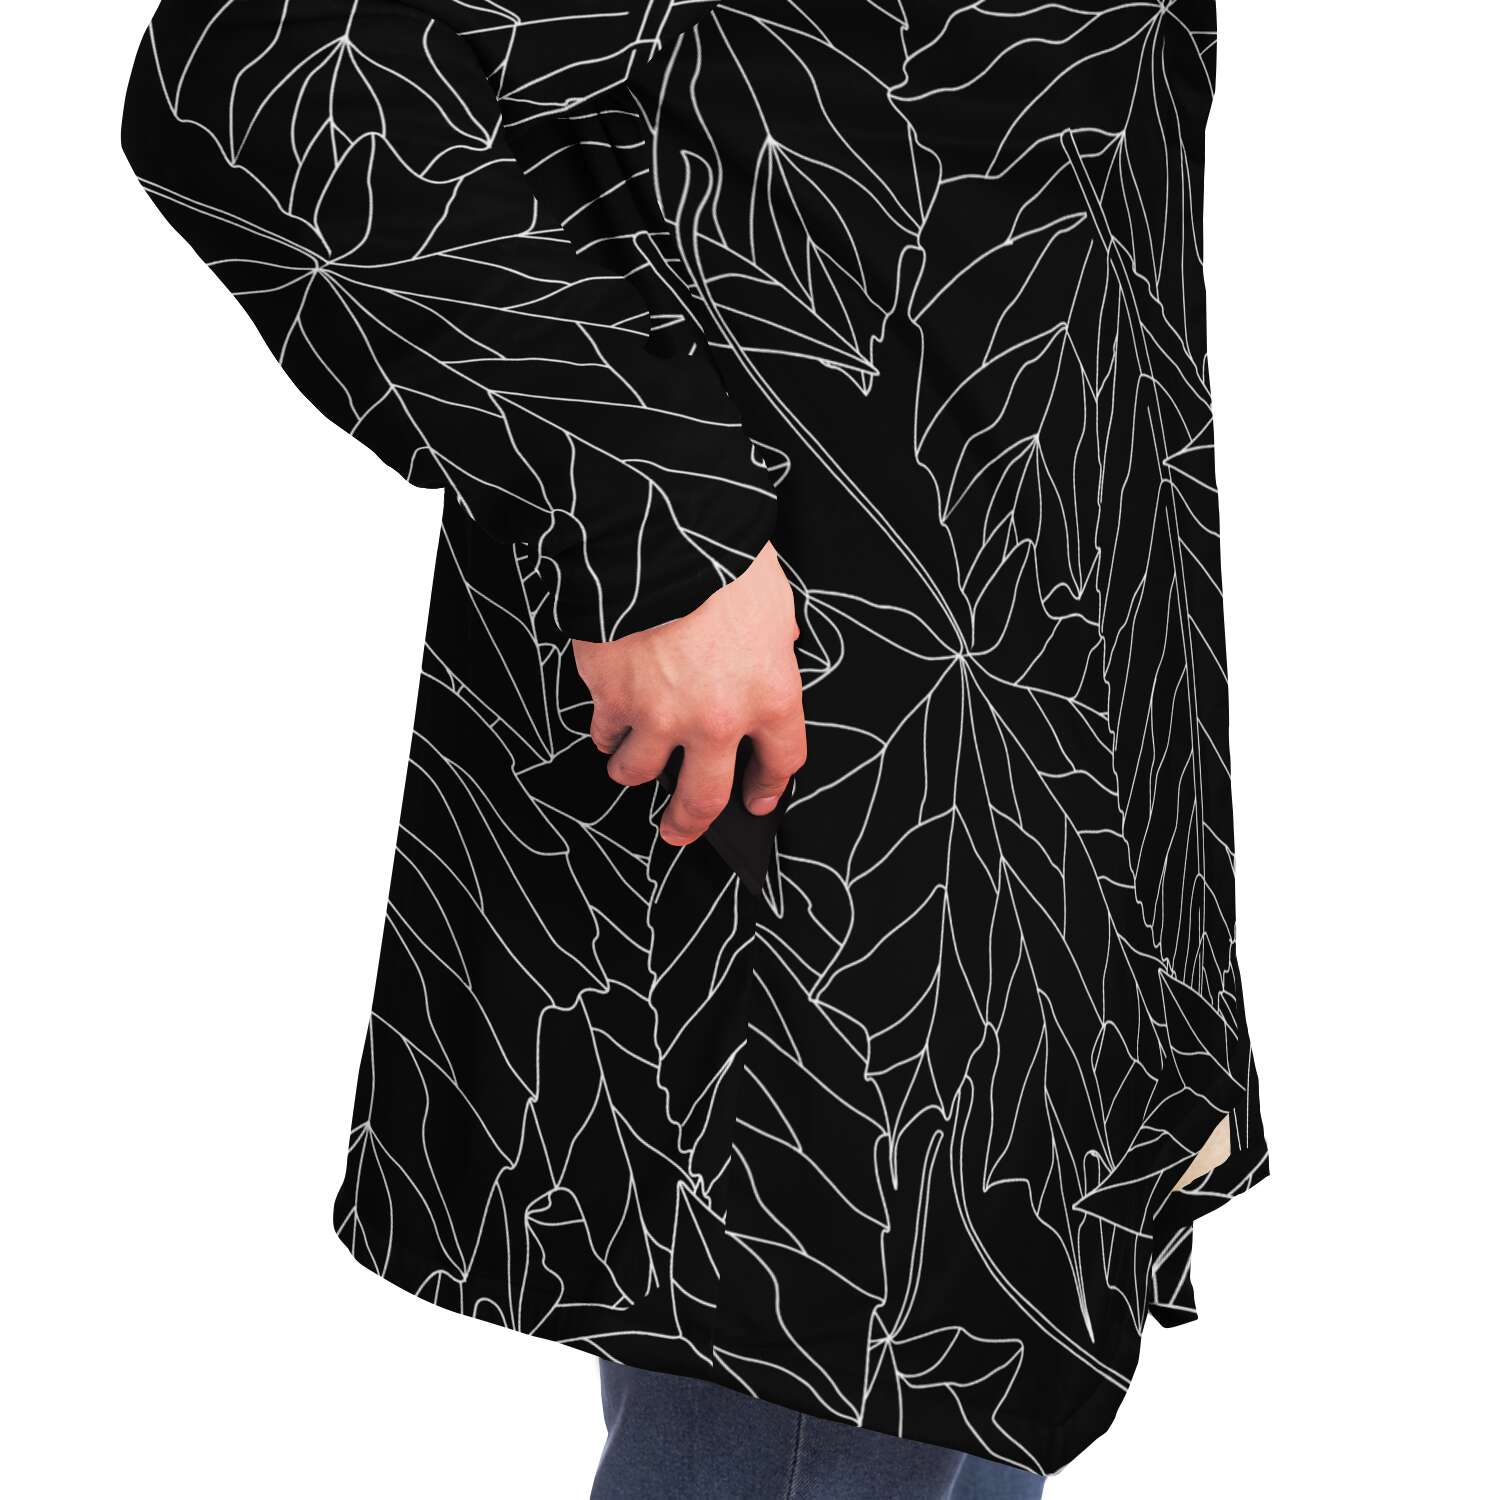 Autumn pattern Microfleece Cloak DromedarShop.com Online Boutique